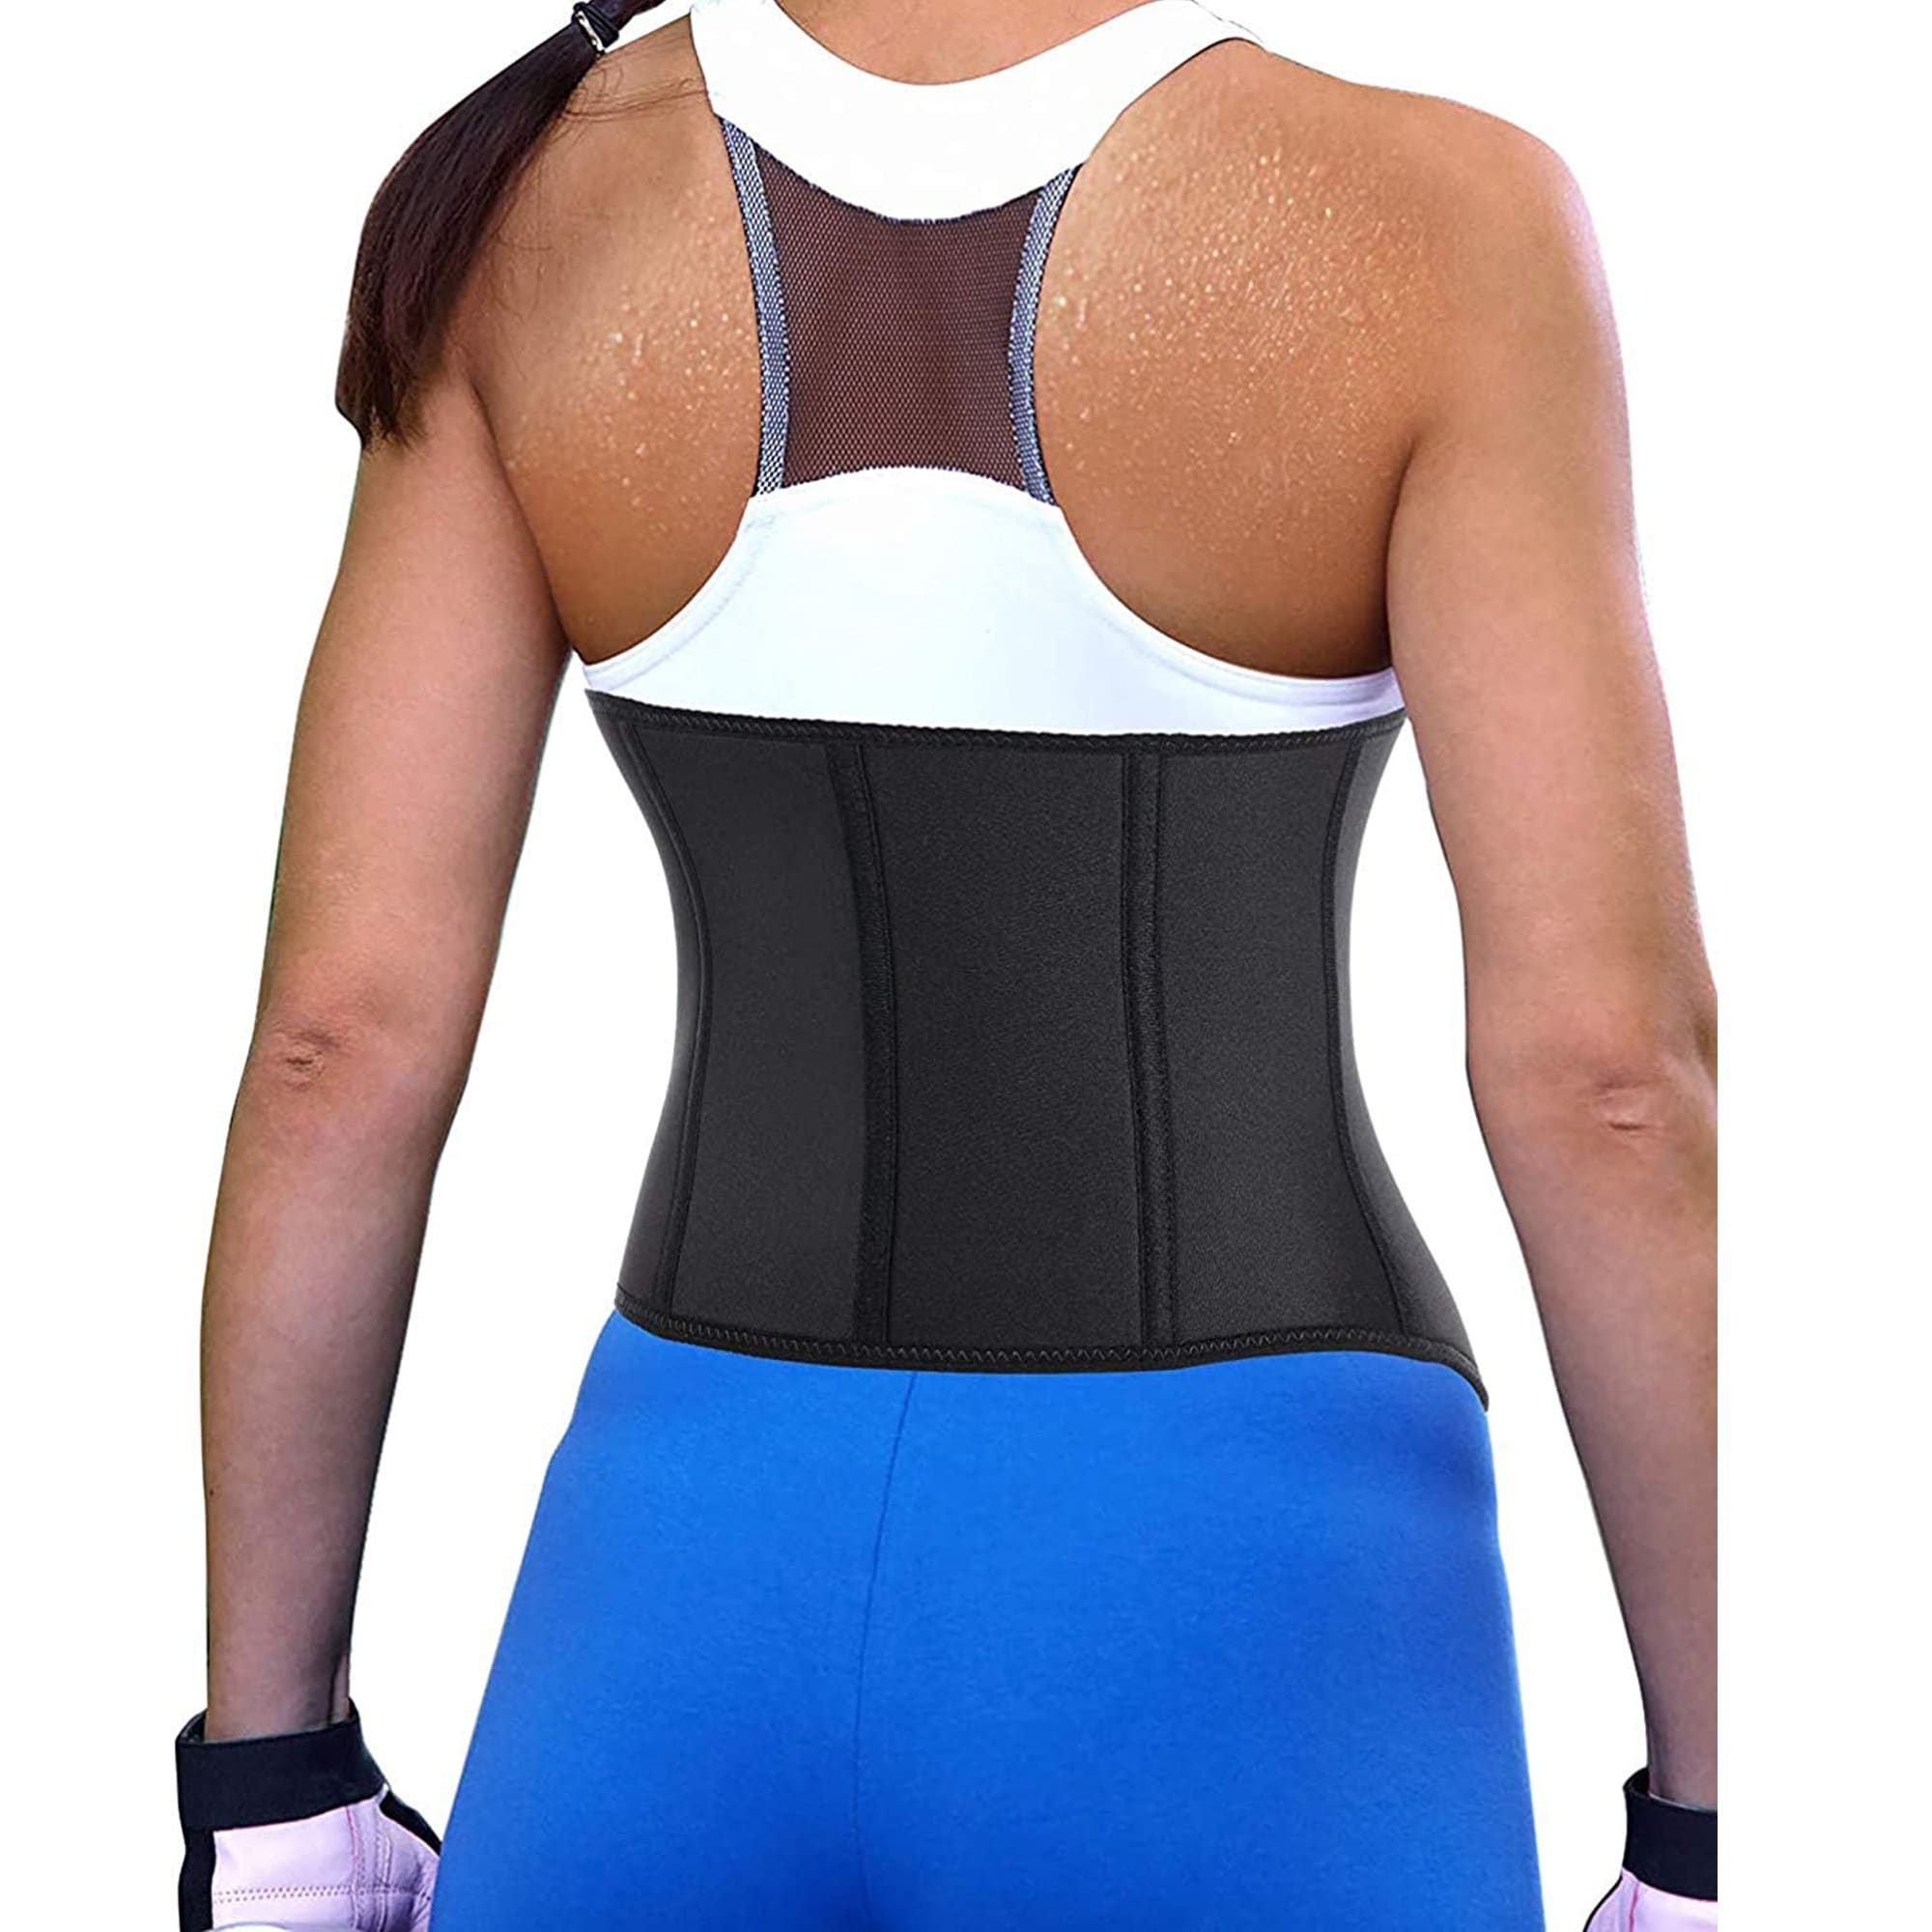 https://ak1.ostkcdn.com/images/products/is/images/direct/2460e67e9dbb4ea8fbbb1cf5d4540eed85f7e2c7/Woman-Exercise-Neoprene-Workout-Waist-Trimmer-Belt-Trainer-Corset-Body-Shaper.jpg